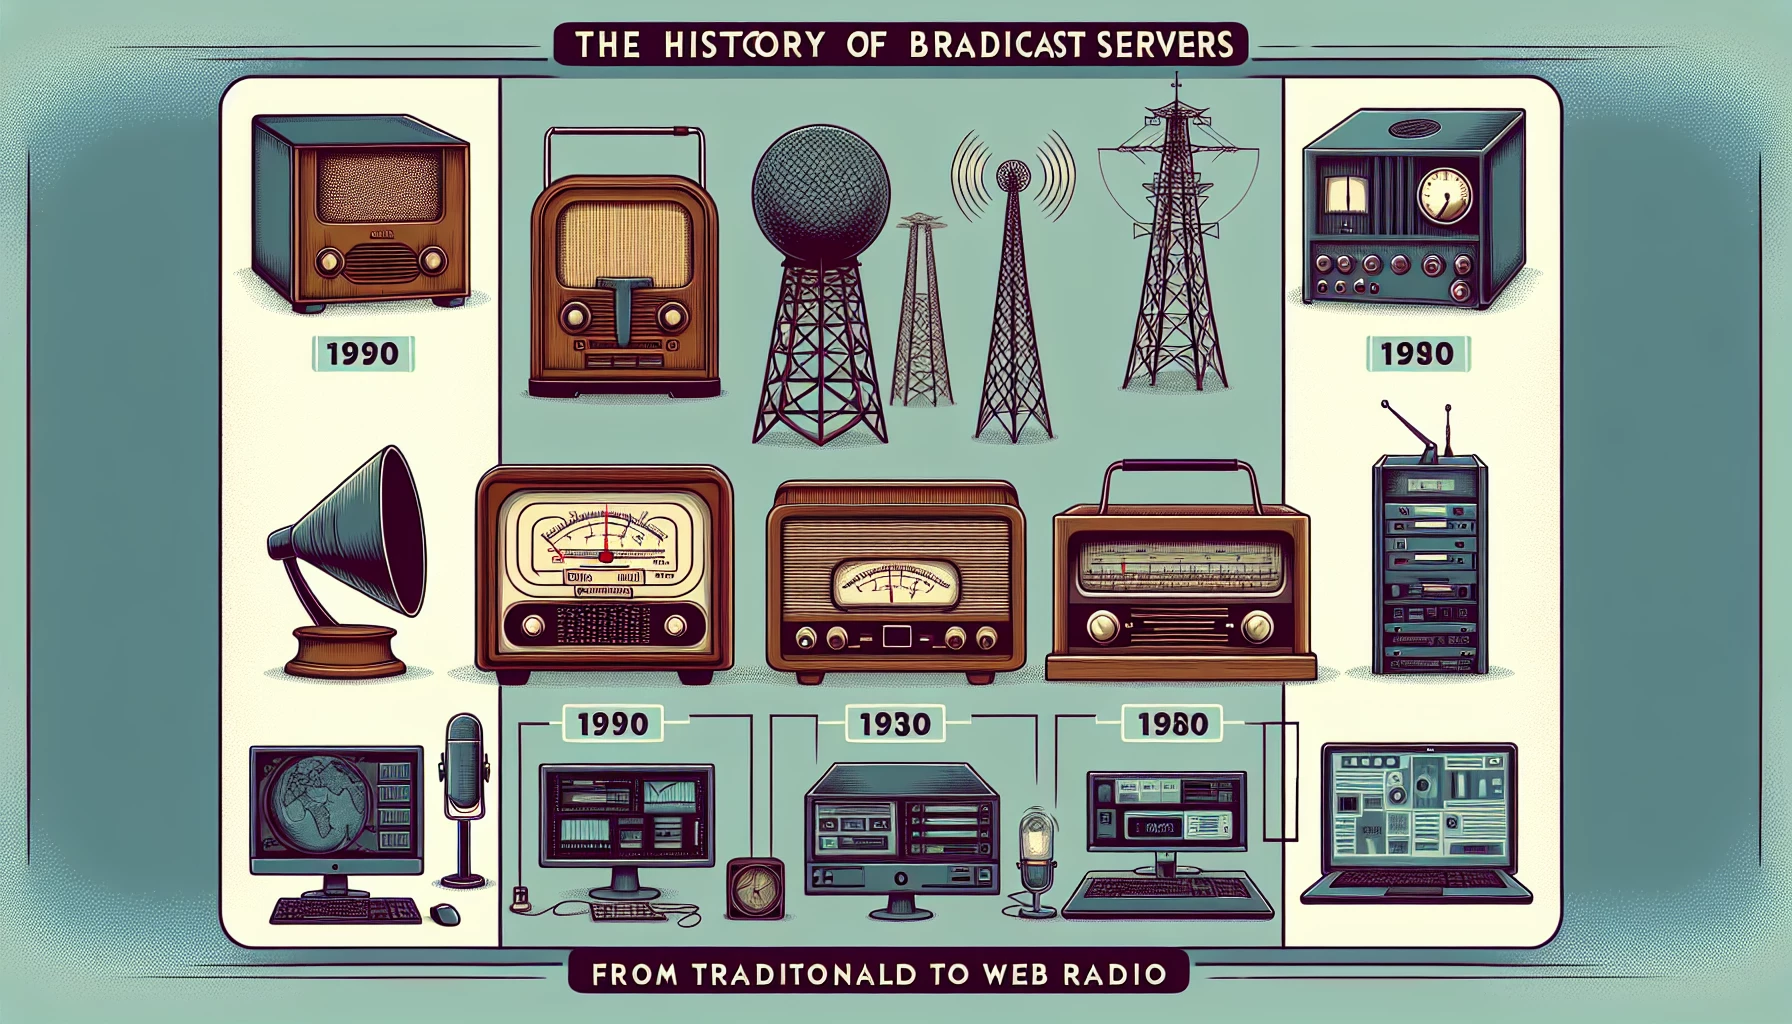 L'histoire des serveurs de diffusion: De la radio traditionnelle à la webradio
